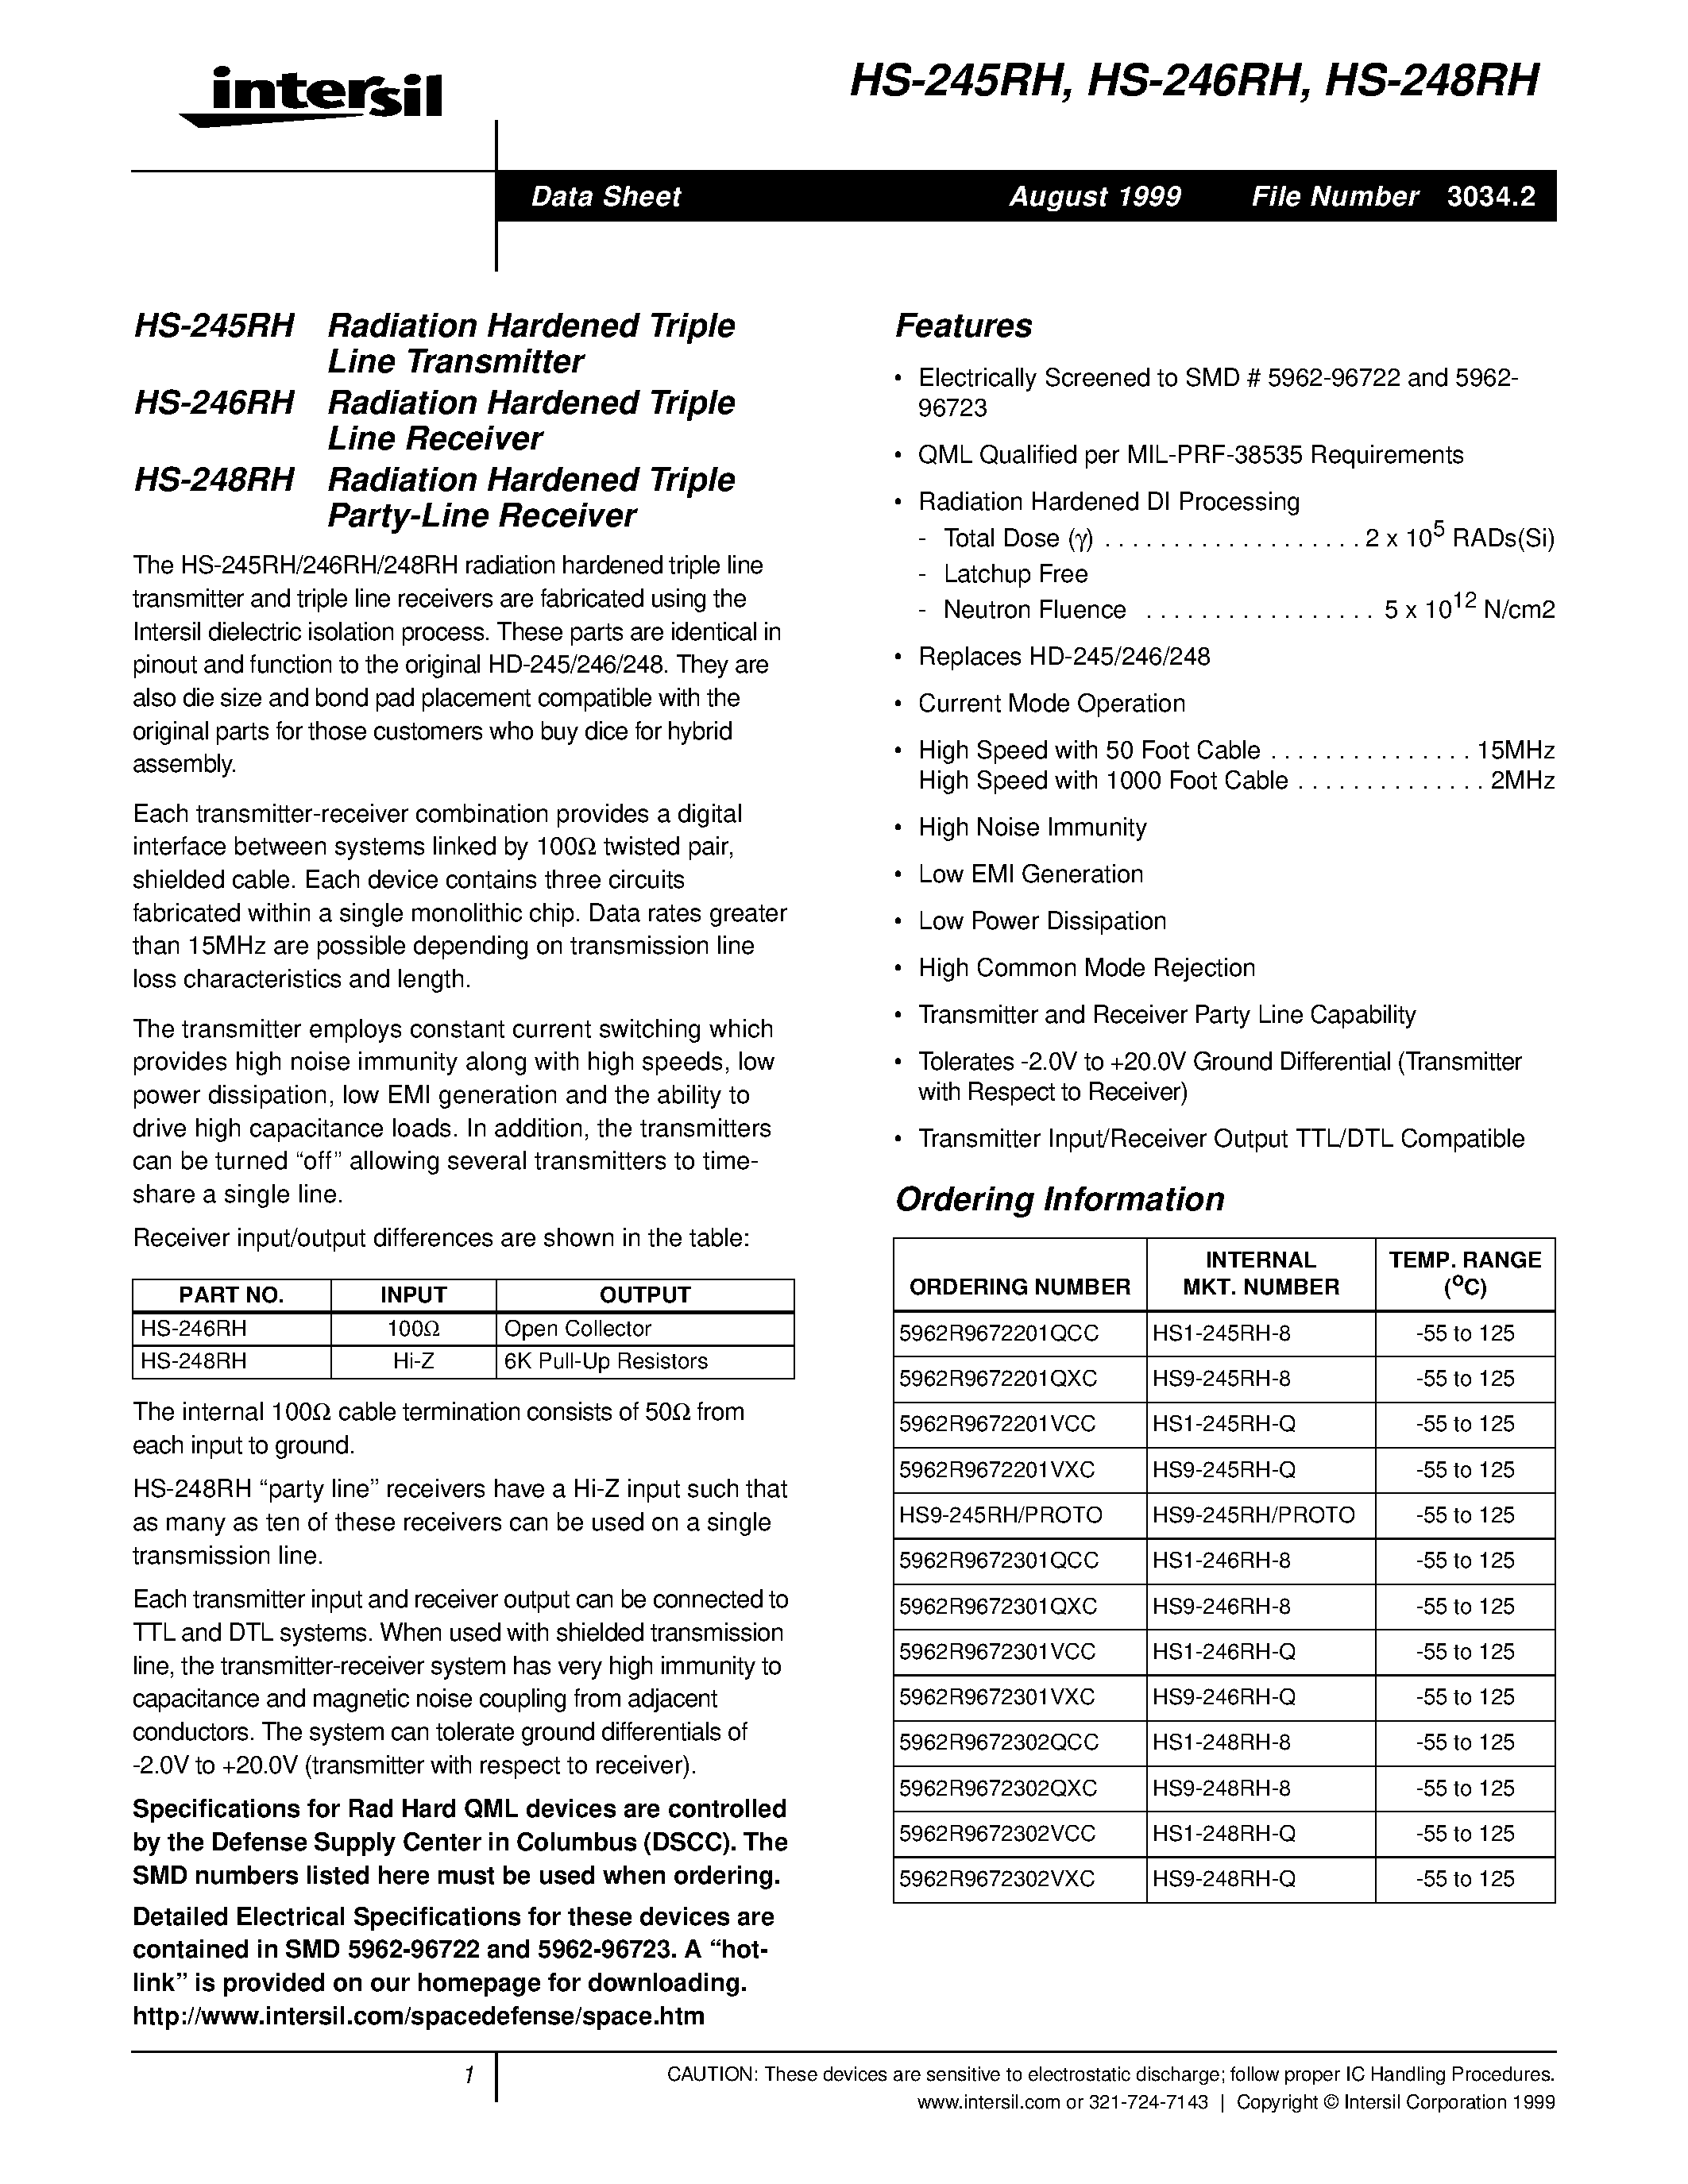 Даташит HS9-248RH-Q - Radiation Hardened Triple Line(party-Line) Transmitter страница 1